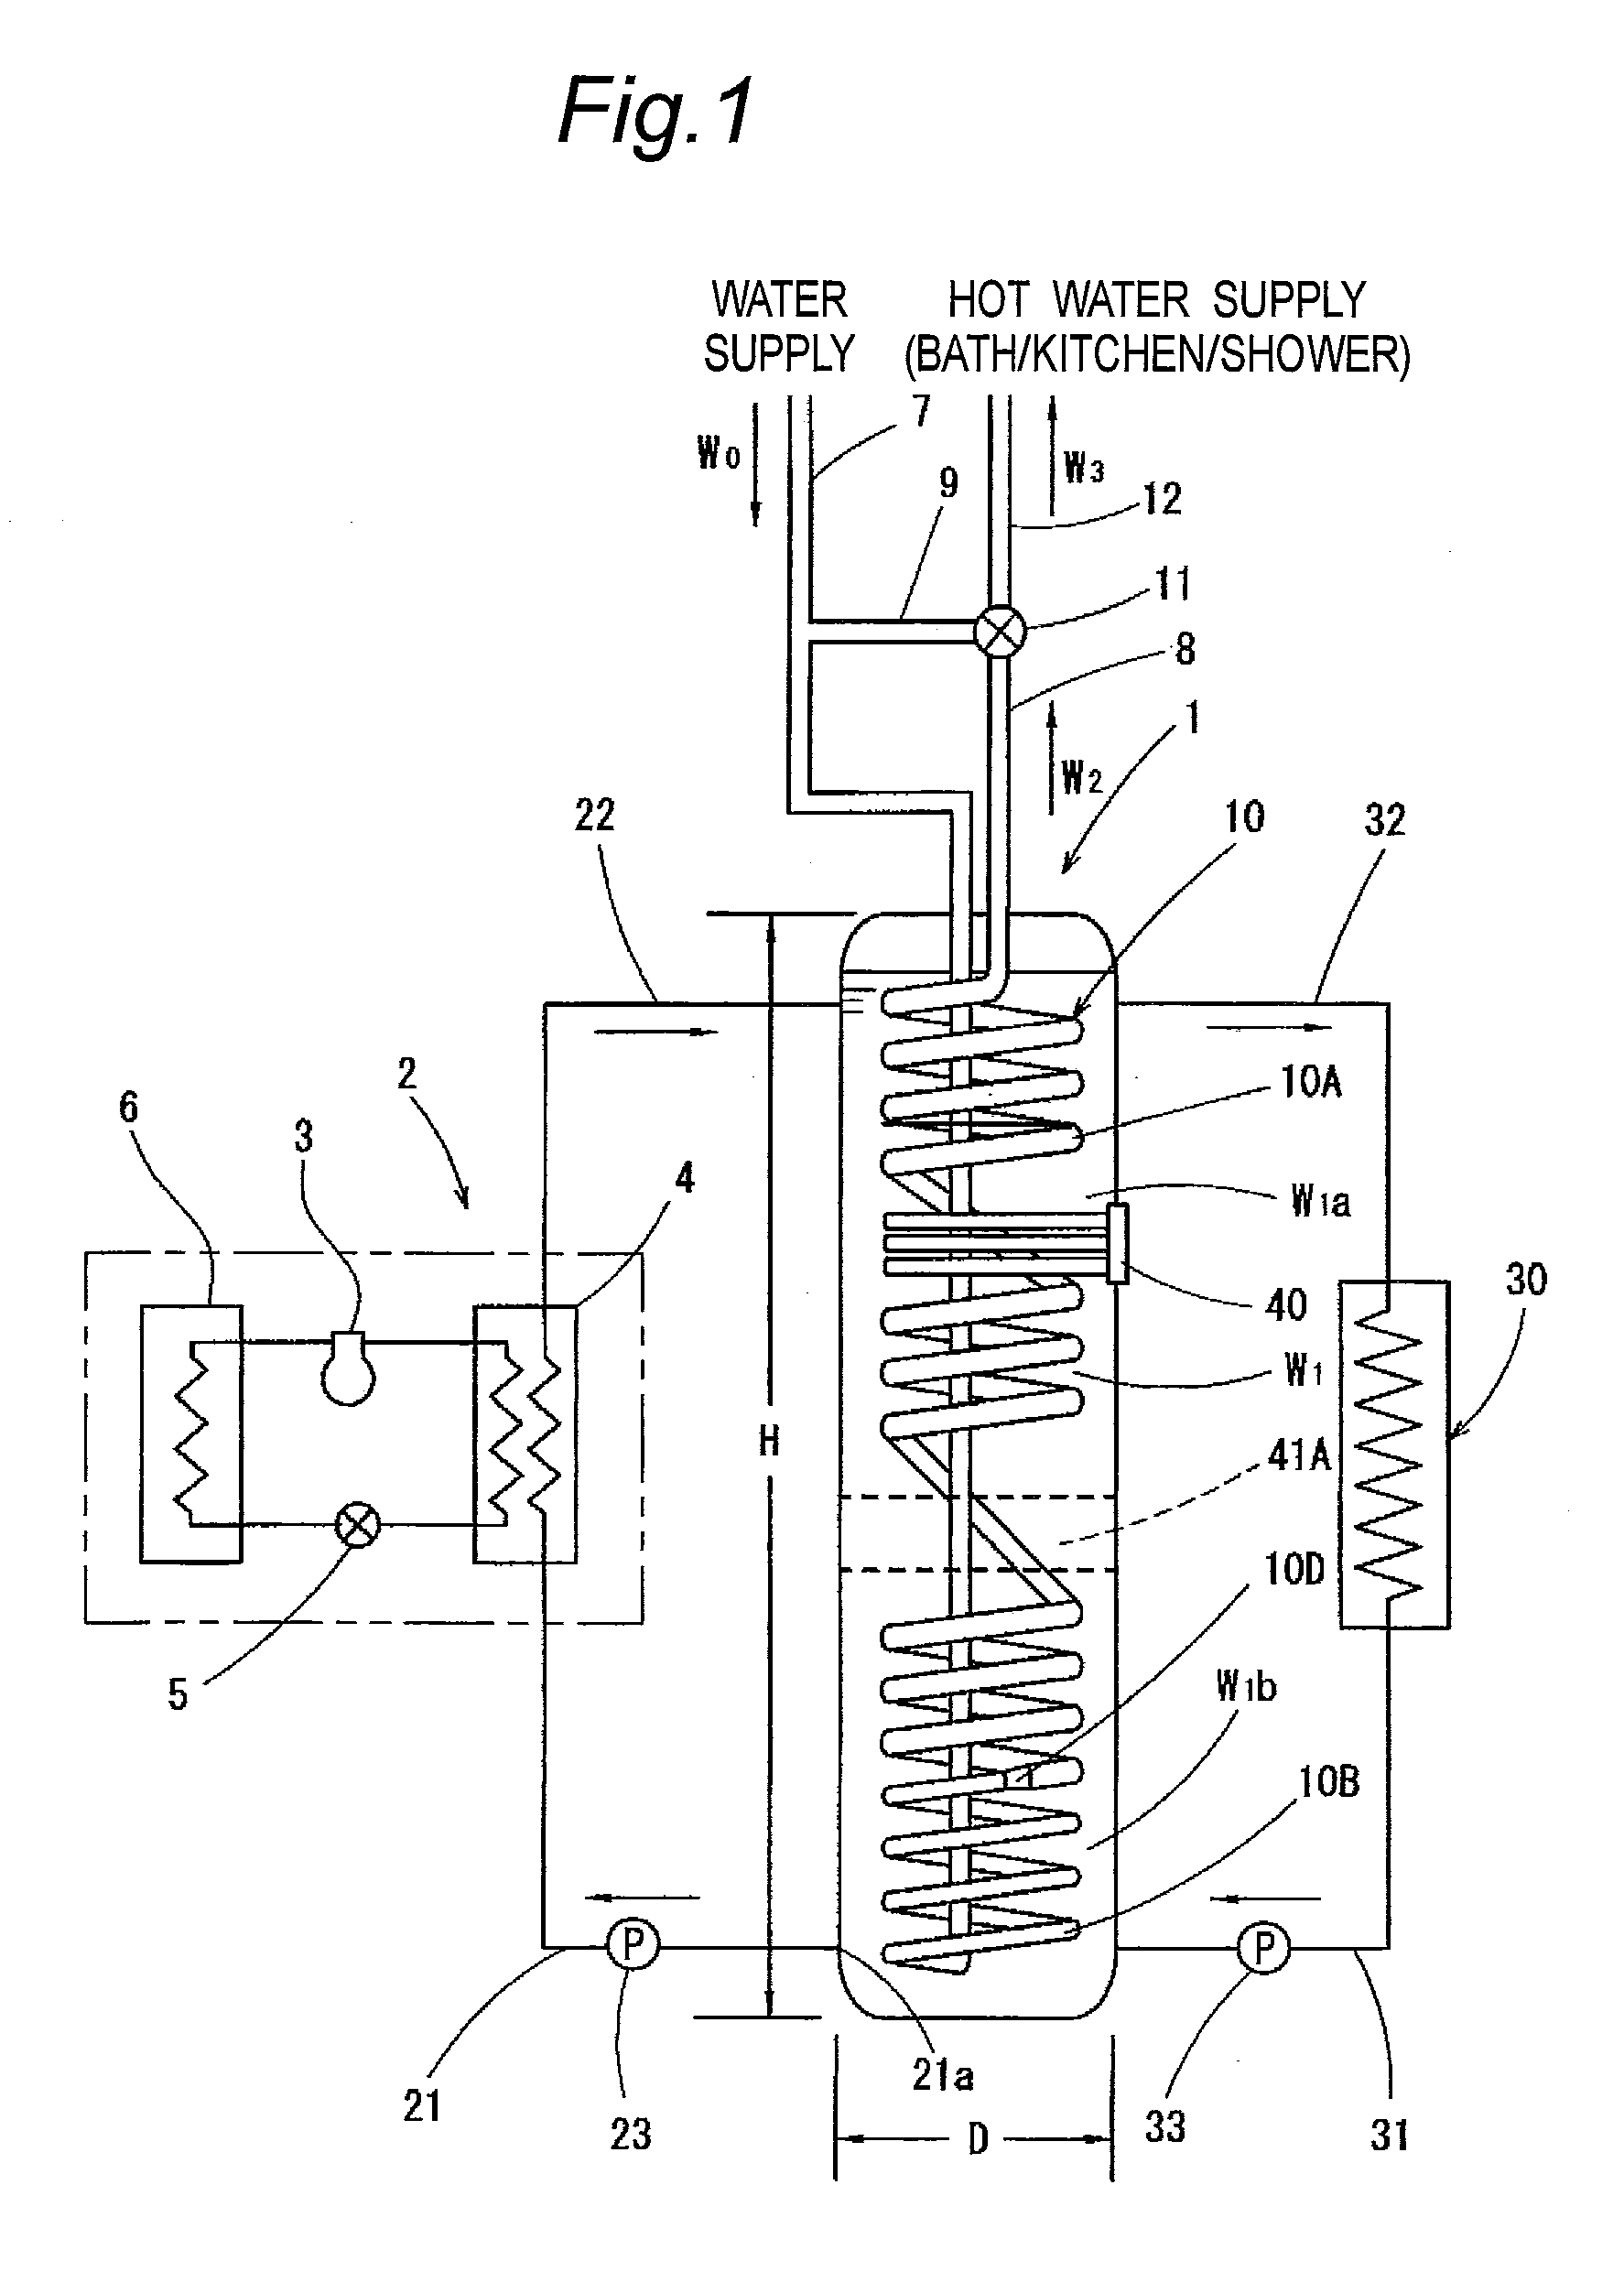 Heating and hot water supply apparatus